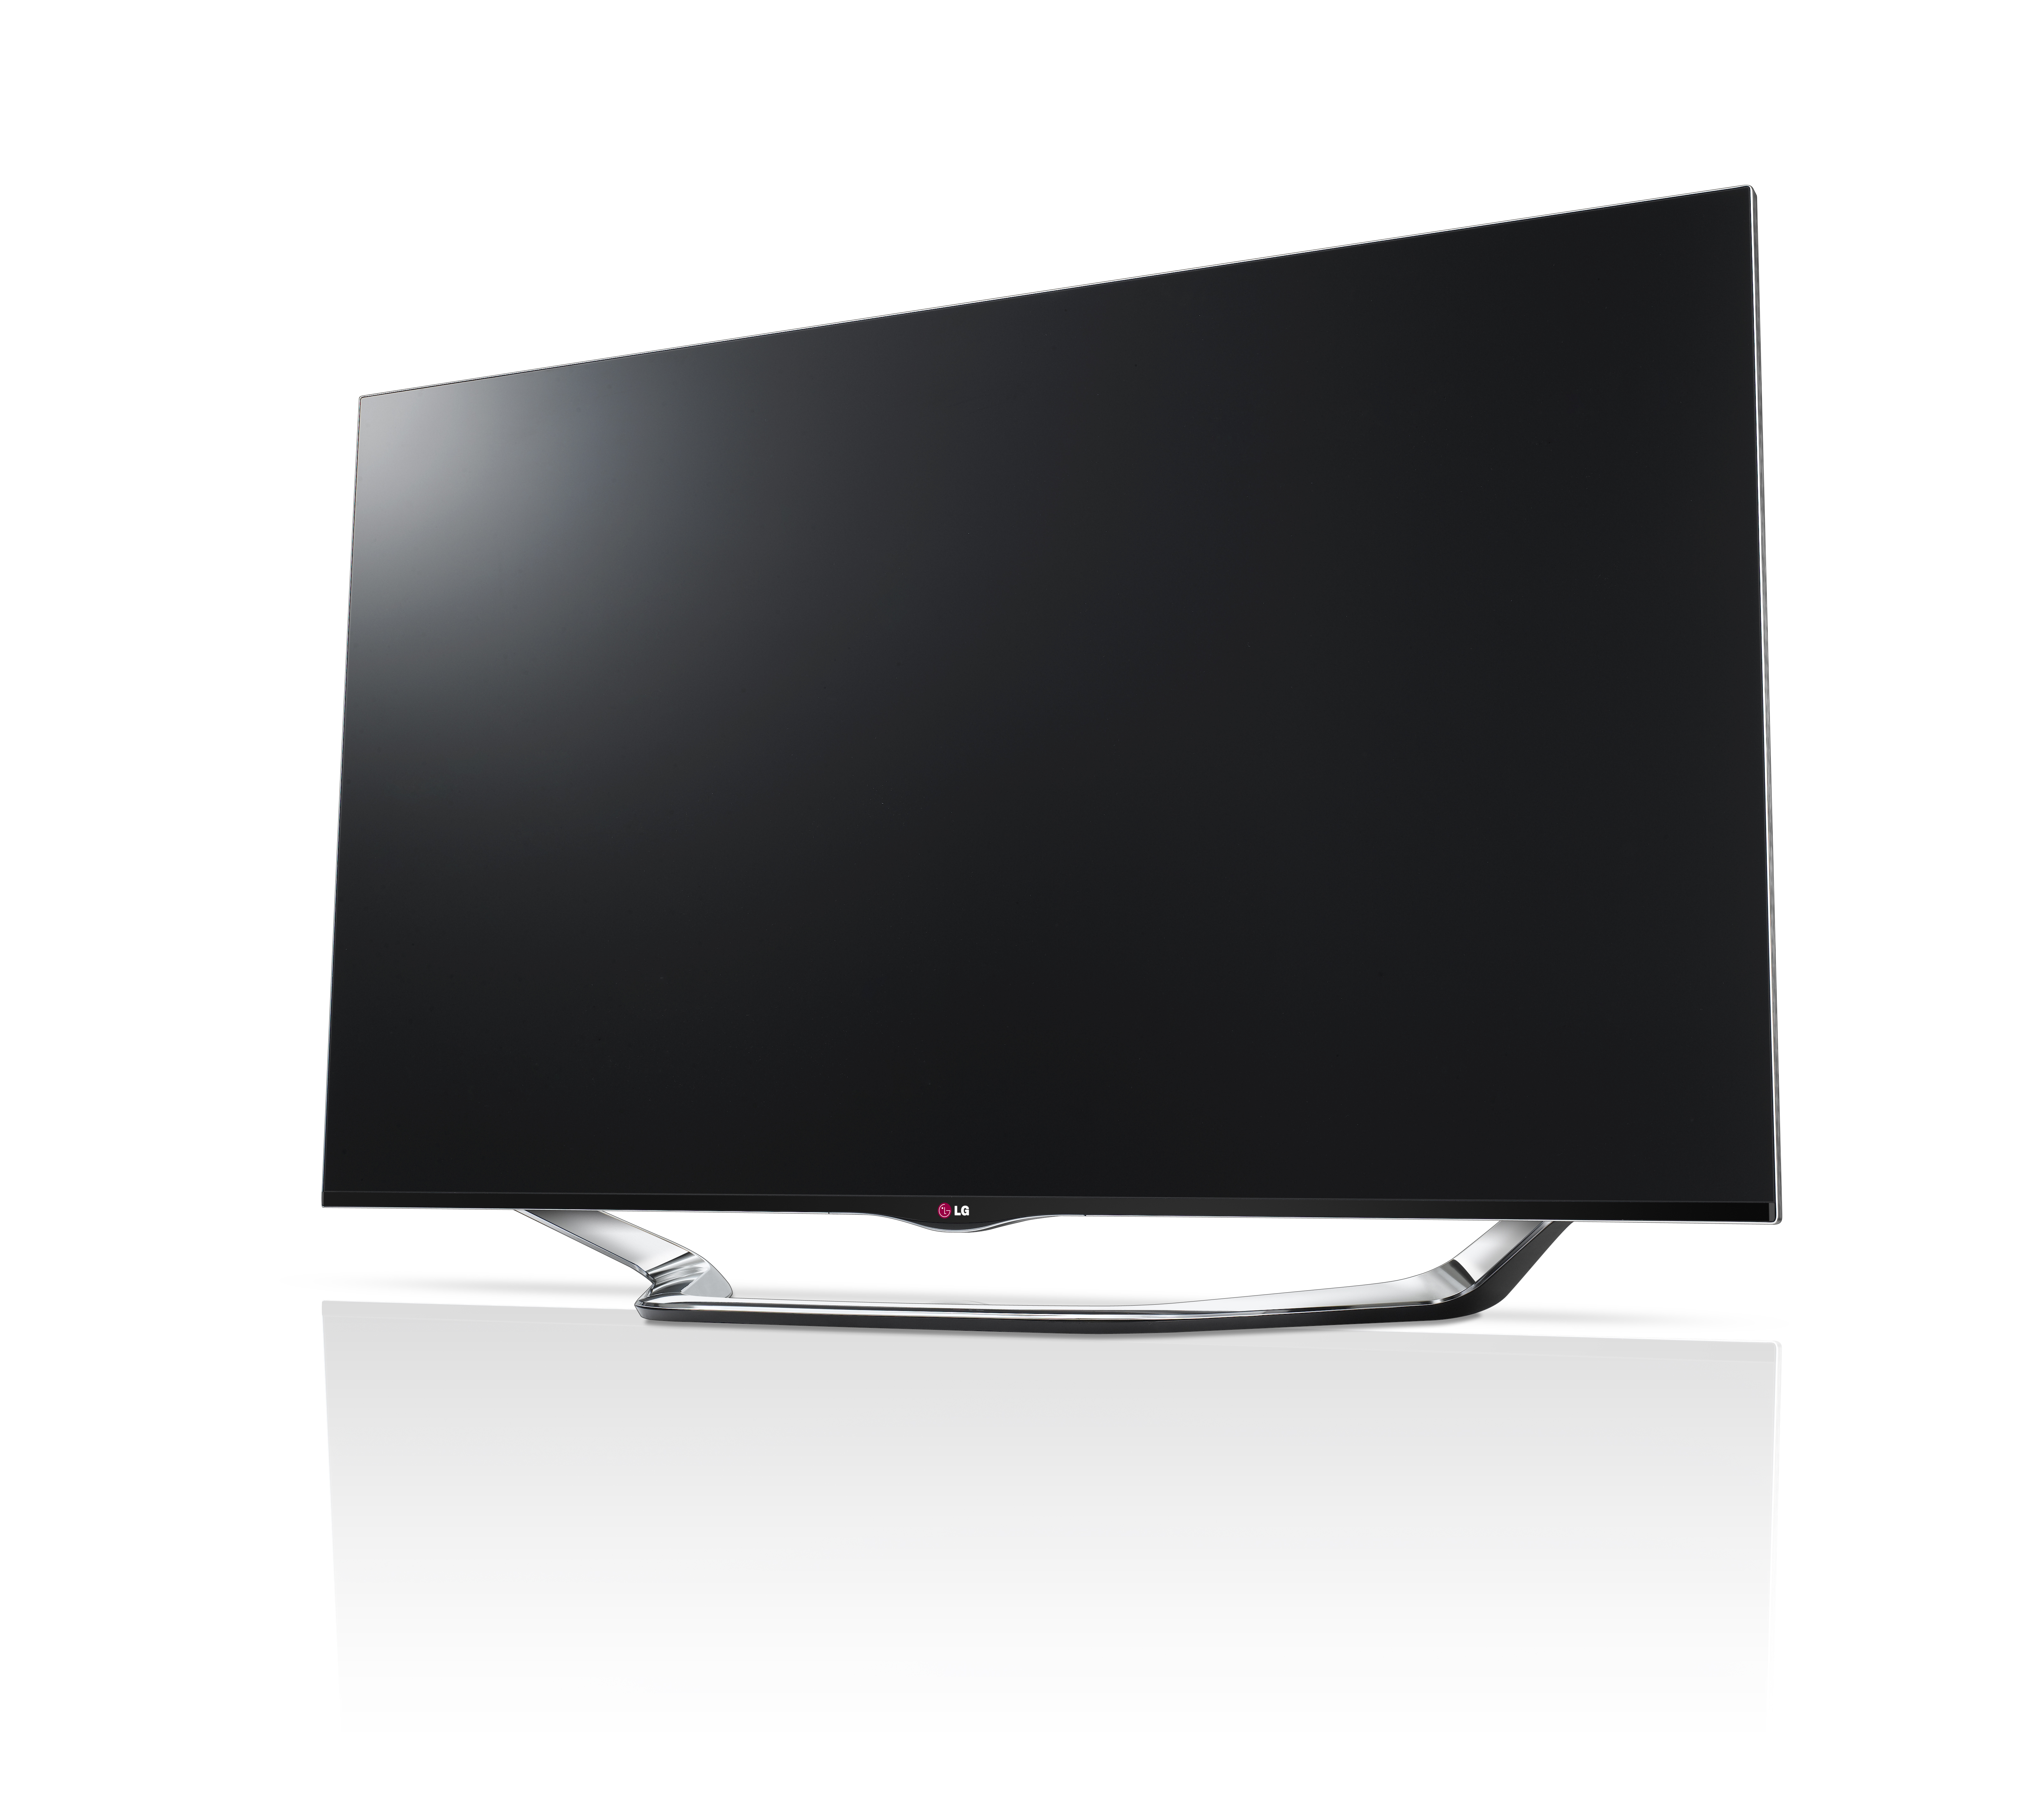 Specialisere hval ventilation Hands On: LG HD 3D Smart TV 55LA8600 - Techgoondu